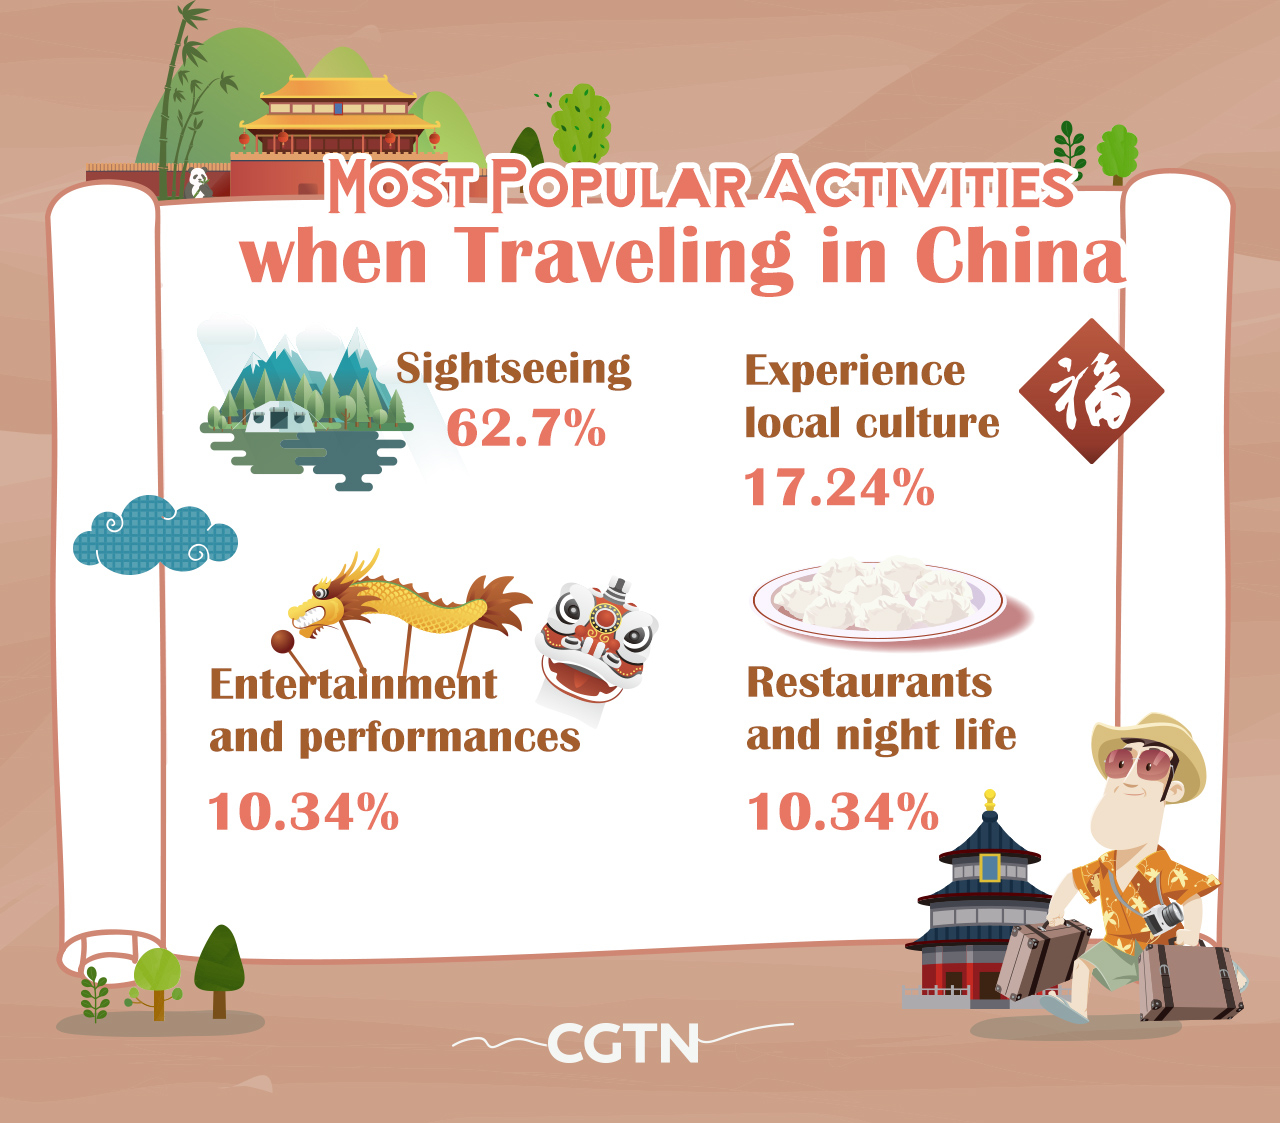 tourism to china down